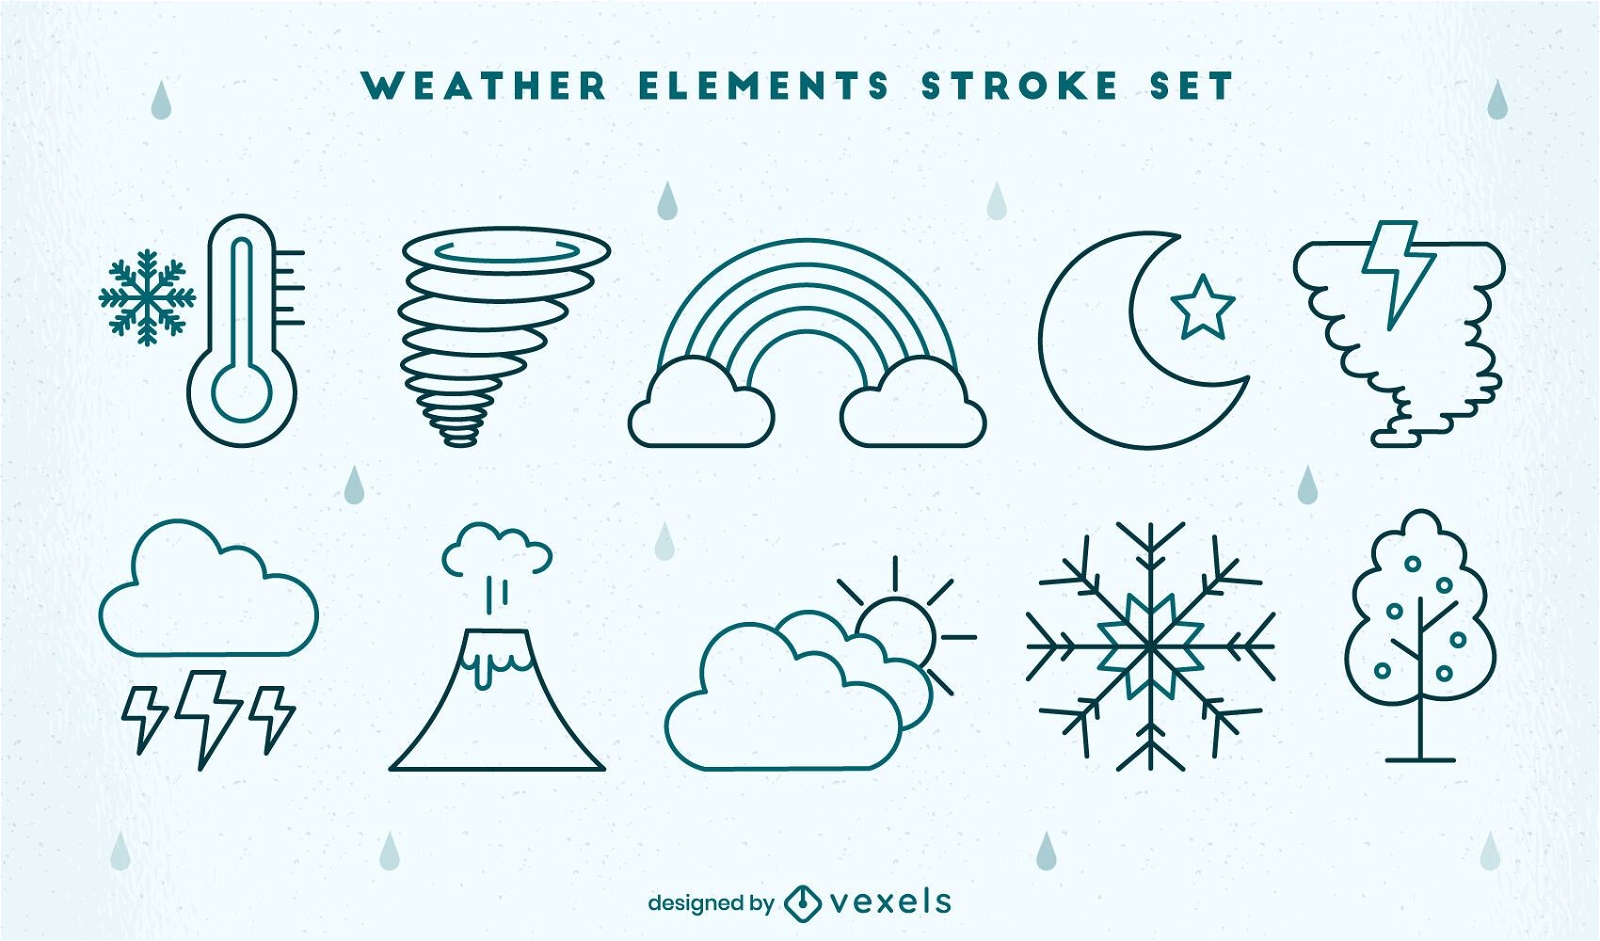 Weather types elements stroke set